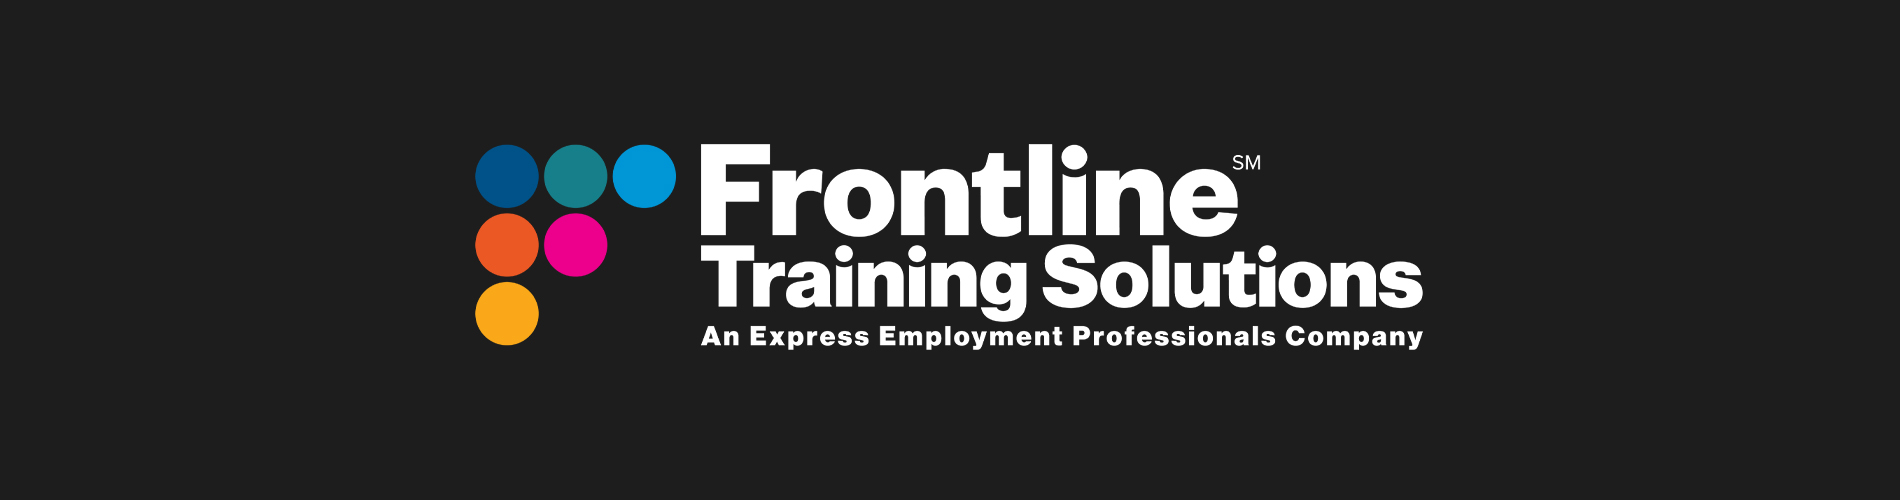 FrontlineTraining-Blackout-Banner